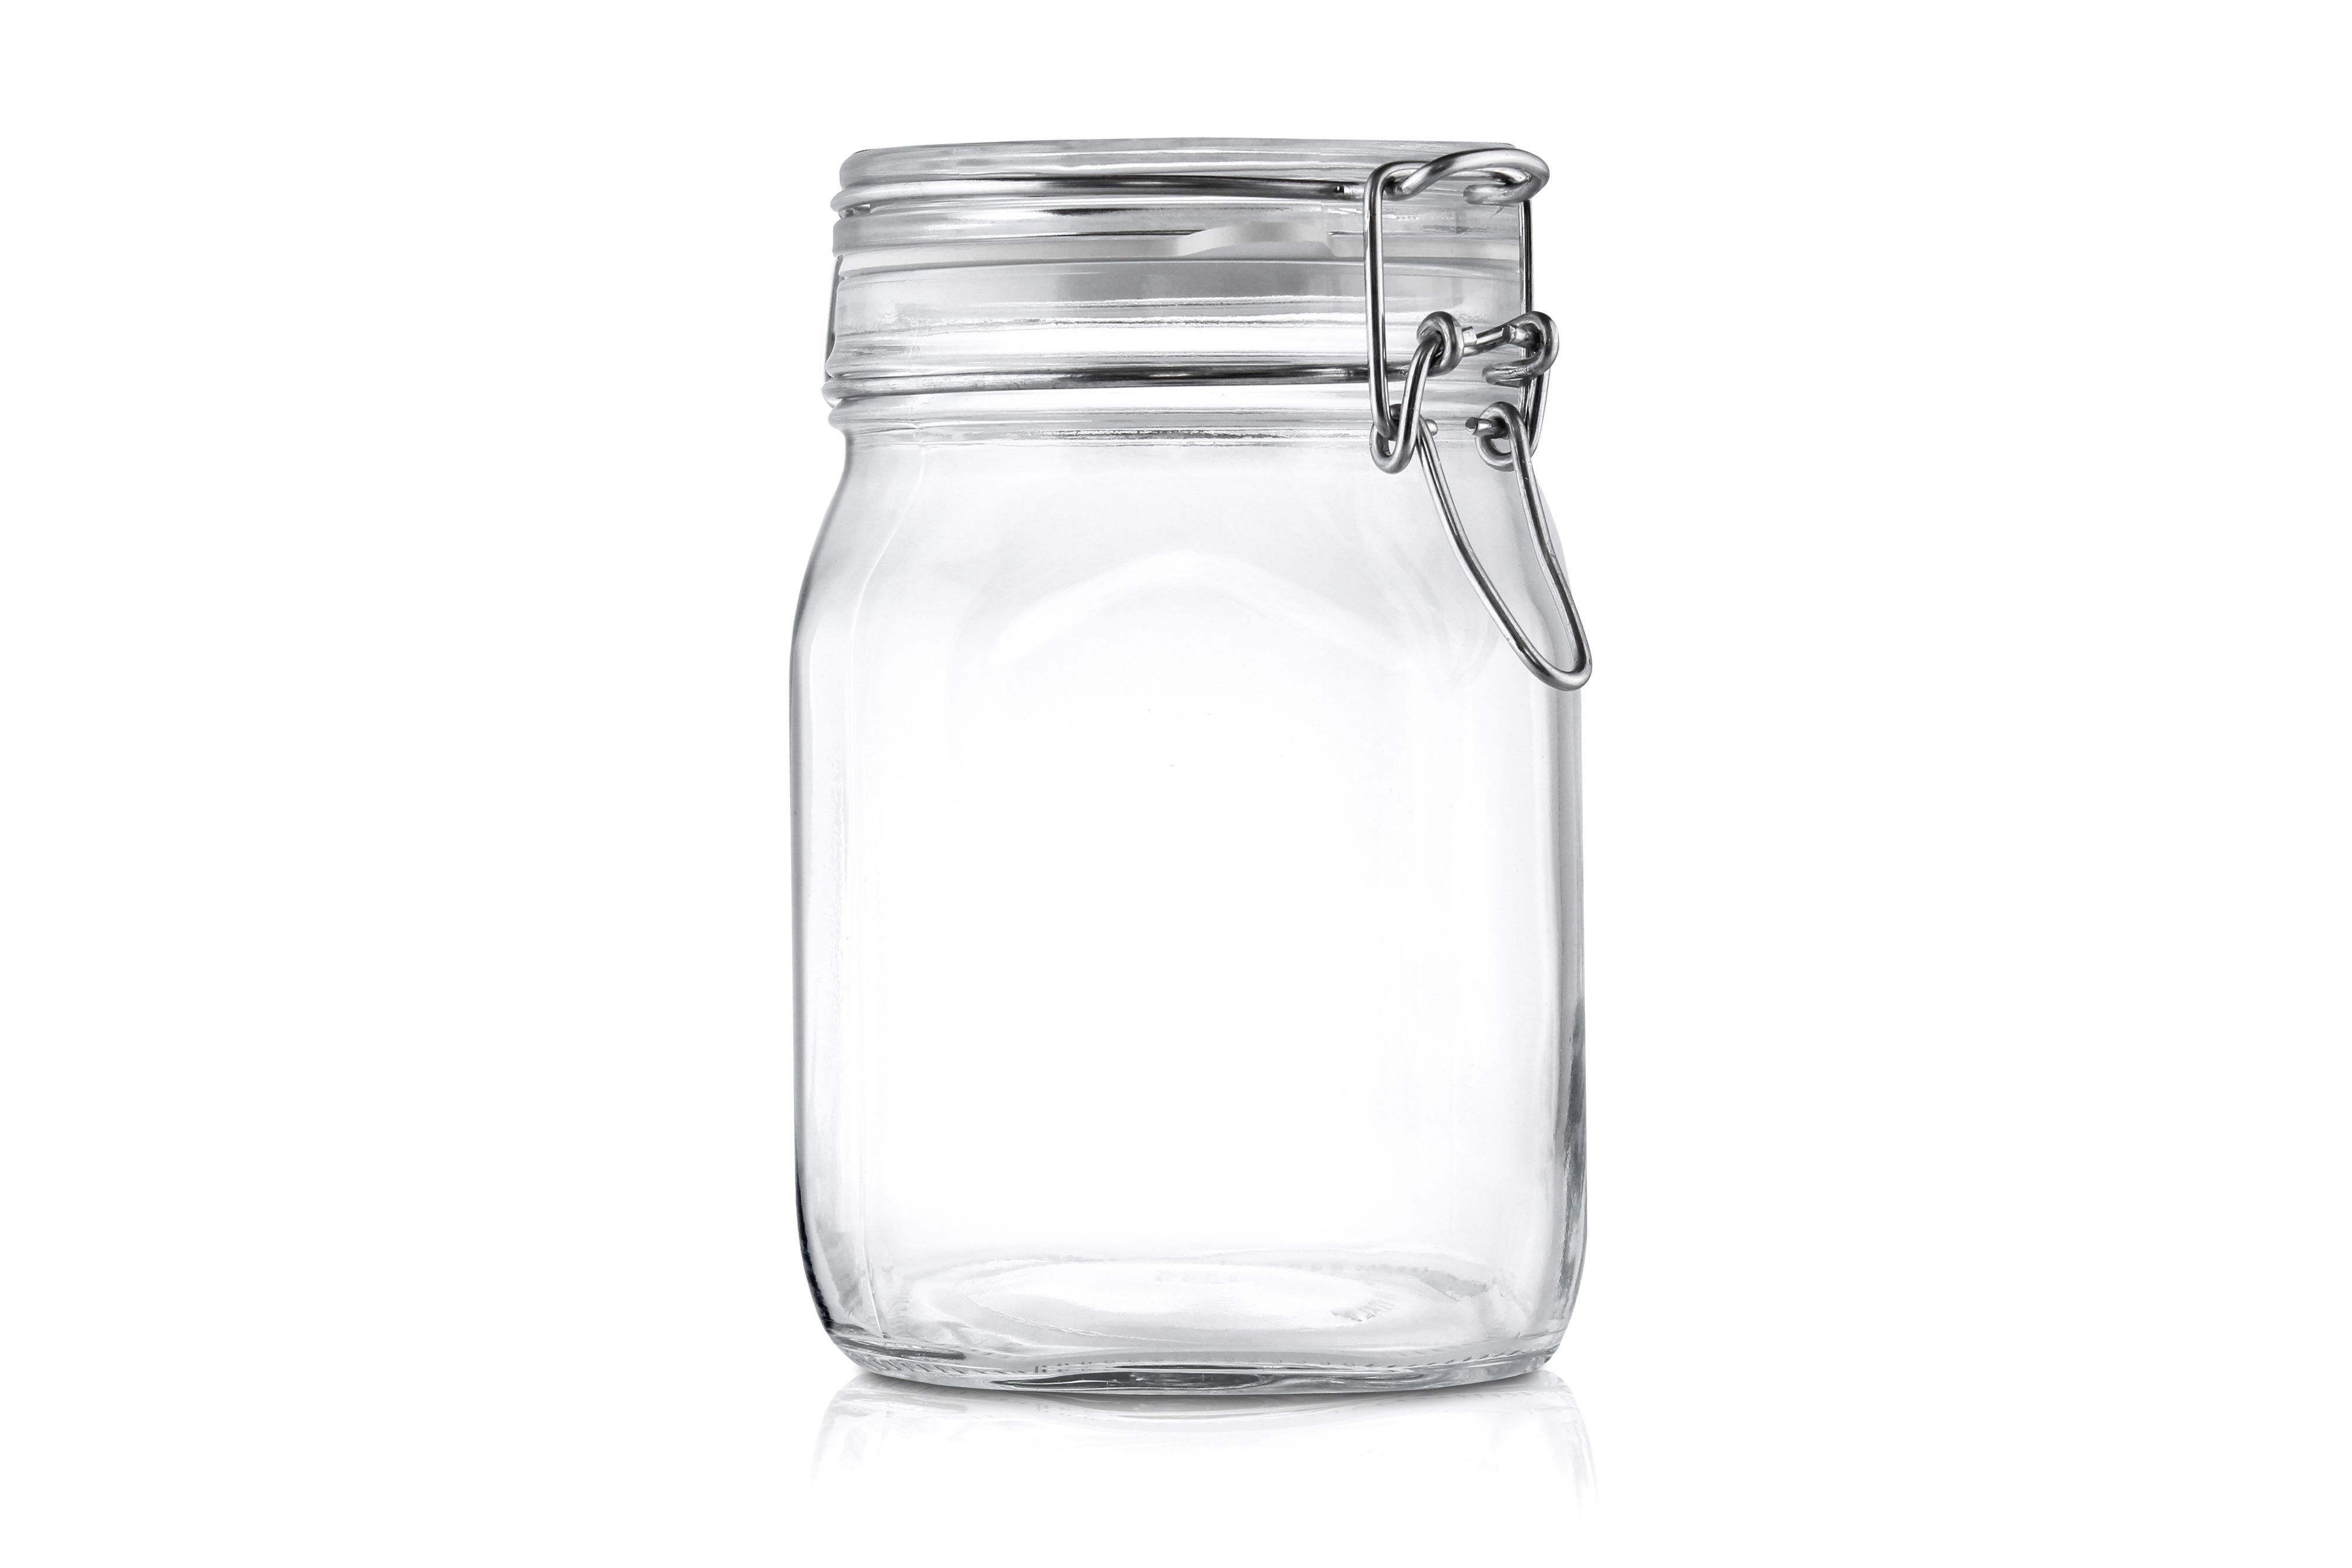 Glas Bügelverschluss Rezeptheft, Einmachglas Set 6er incl 1,0L Fido Vorratsglas Original MamboCat